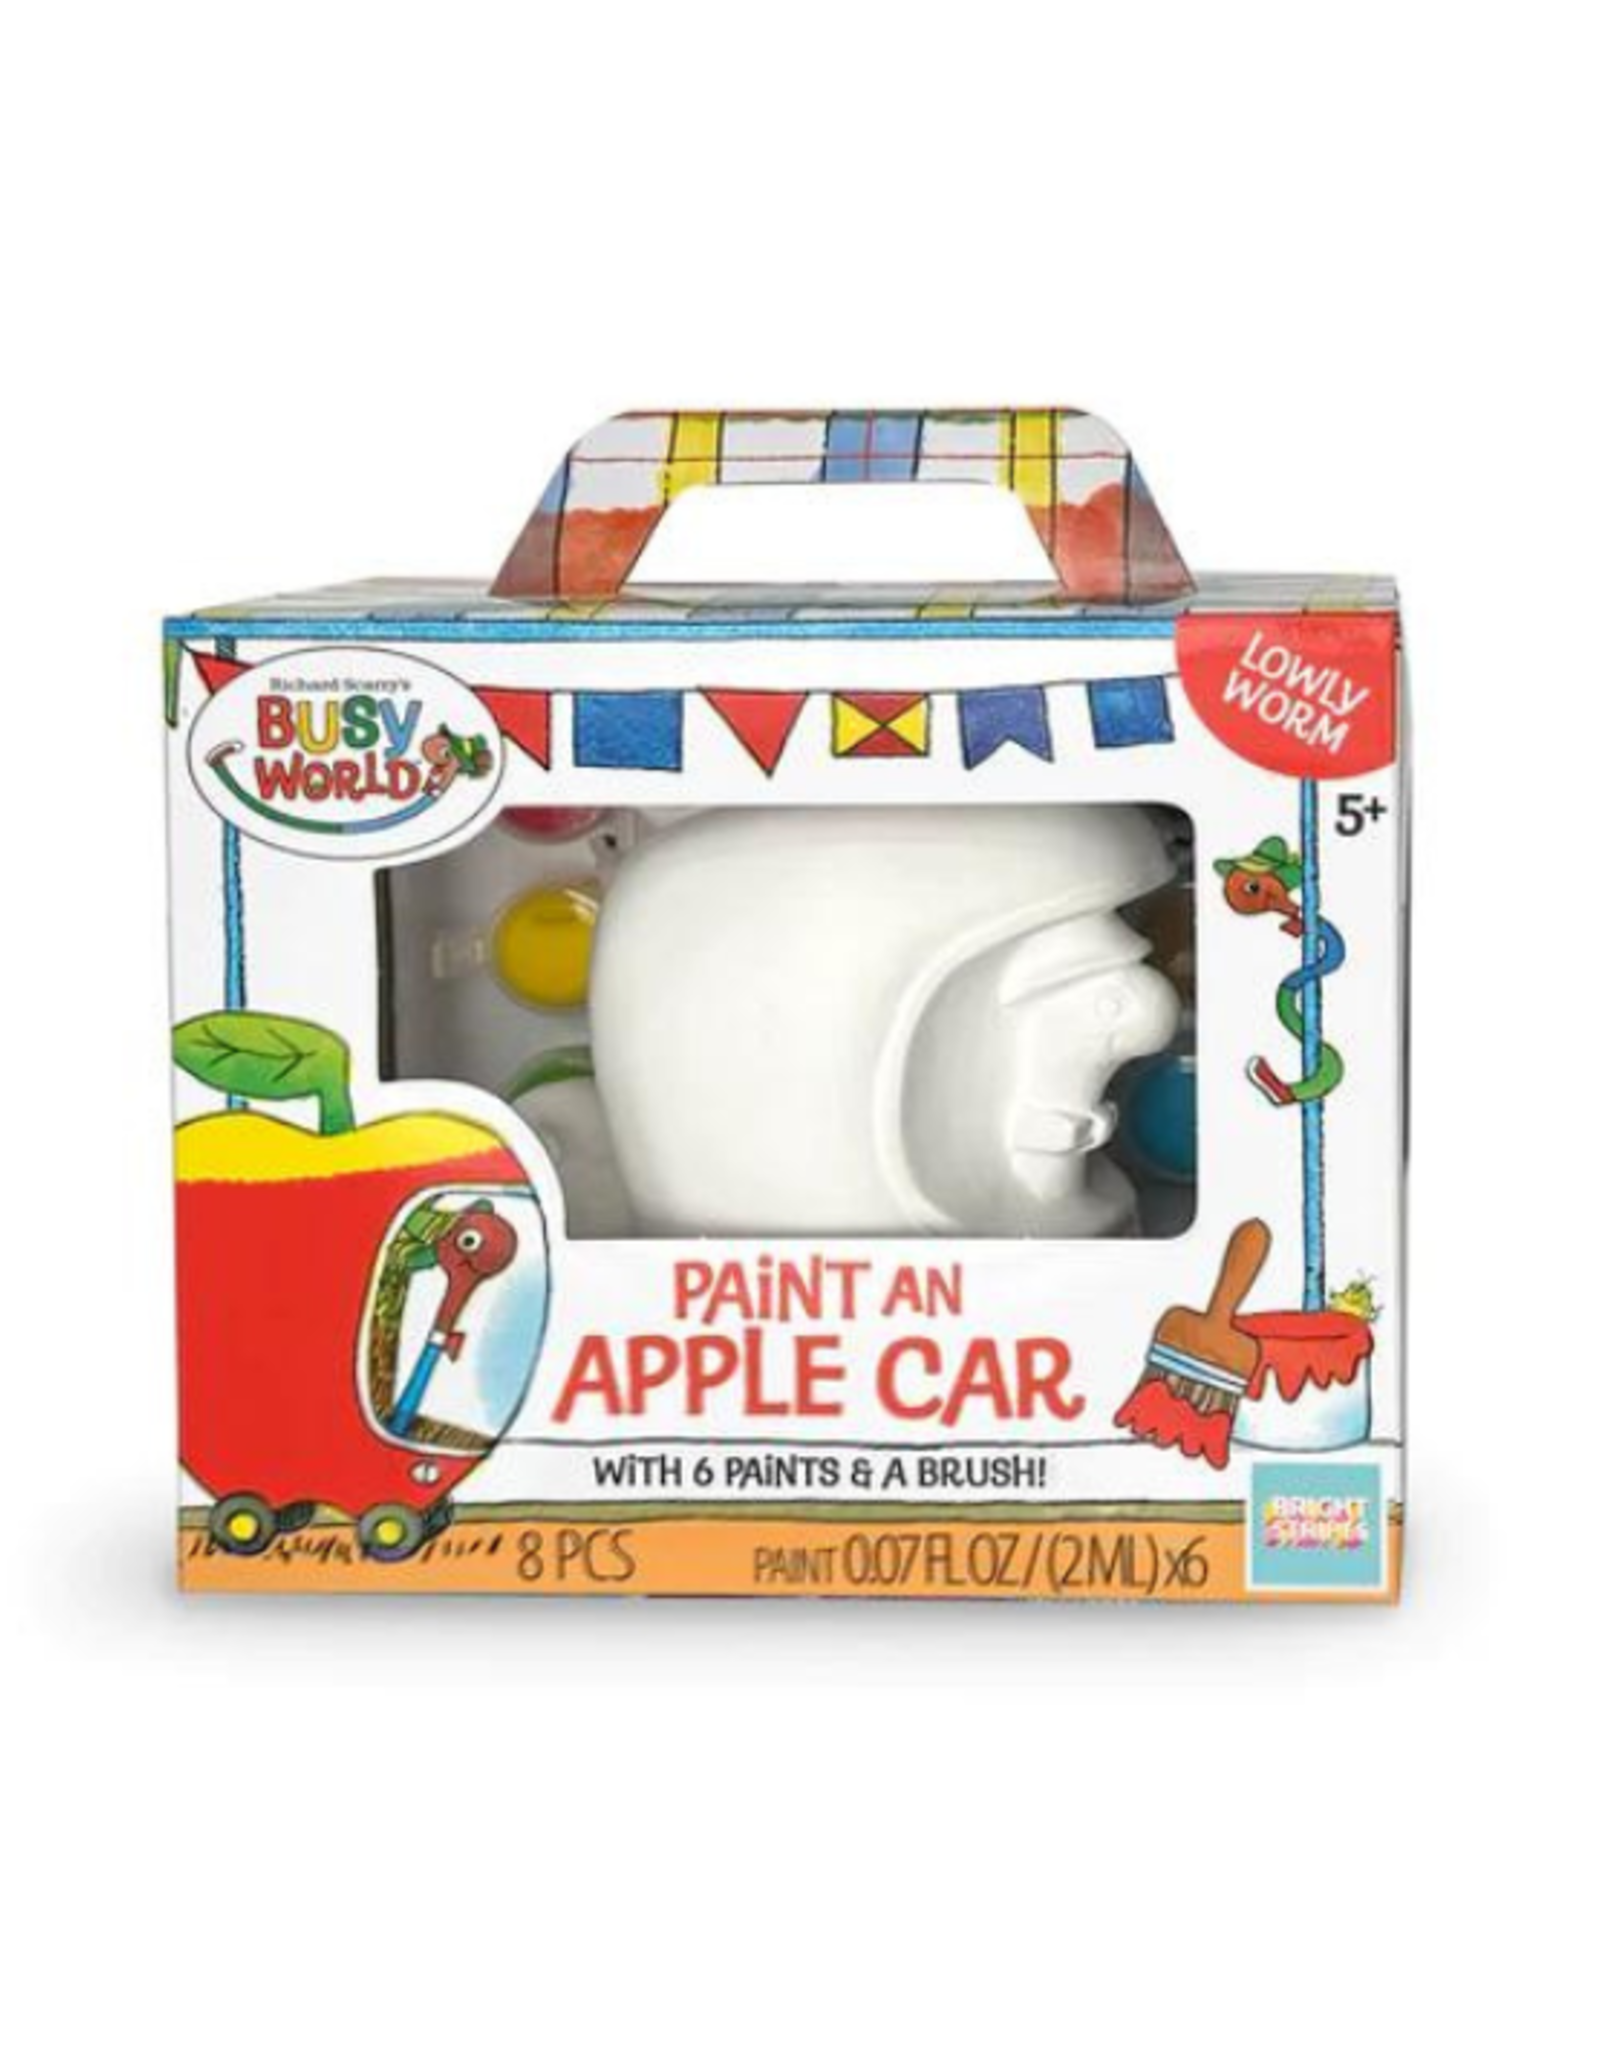 Busy World Richard Scarry's Busy World - Paint an Apple Car: Lowly Worm